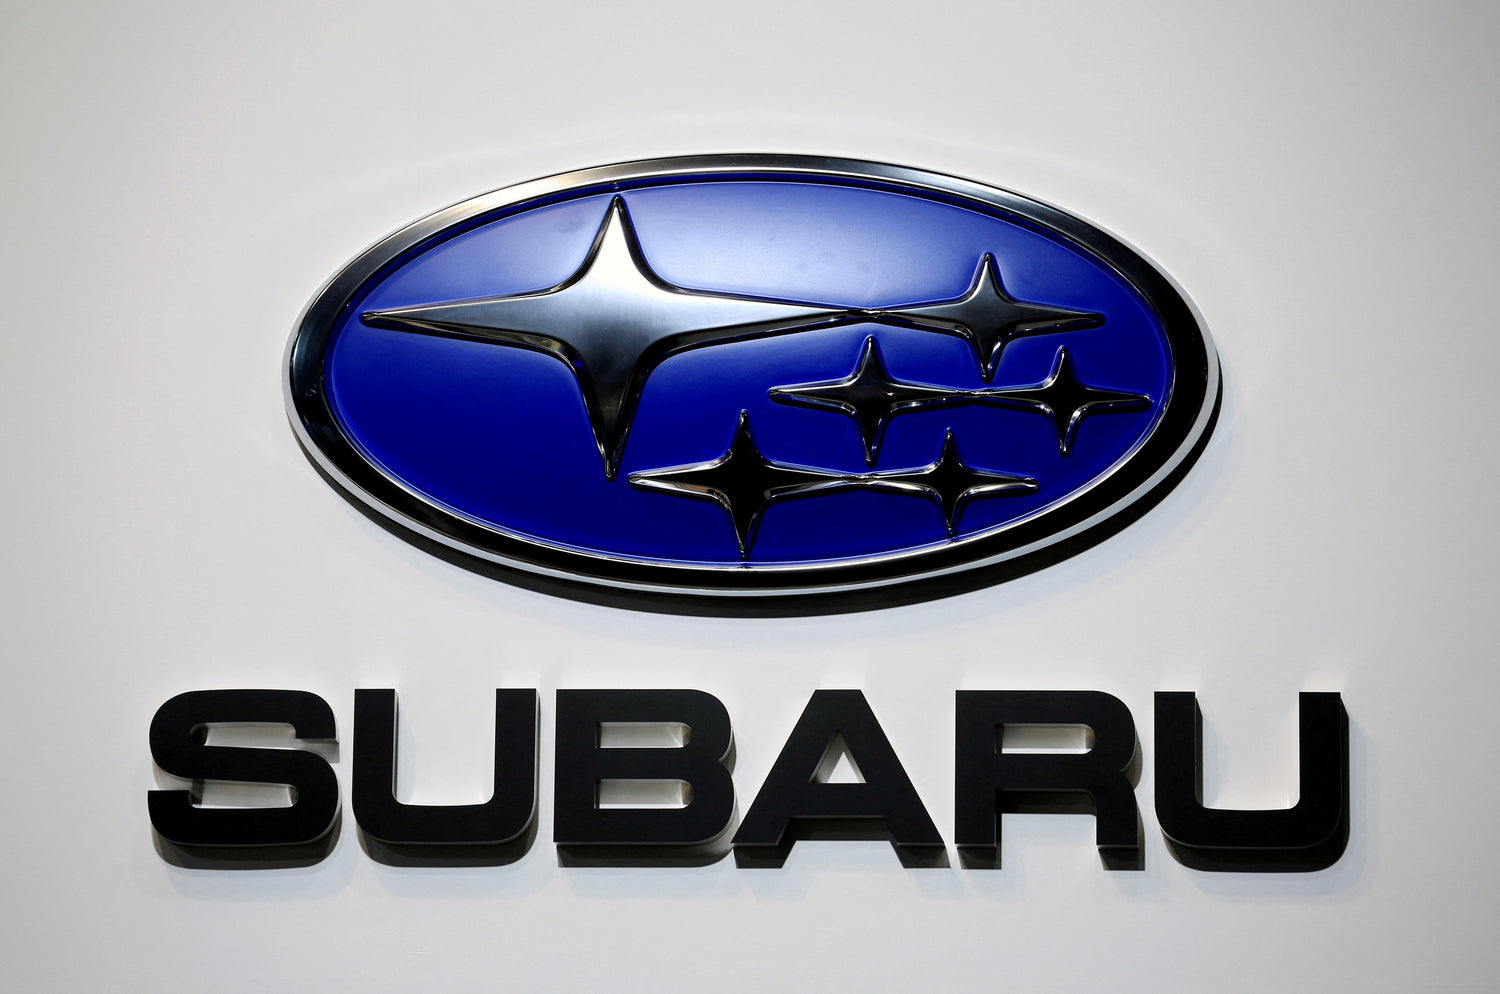 Shop all Subaru Products